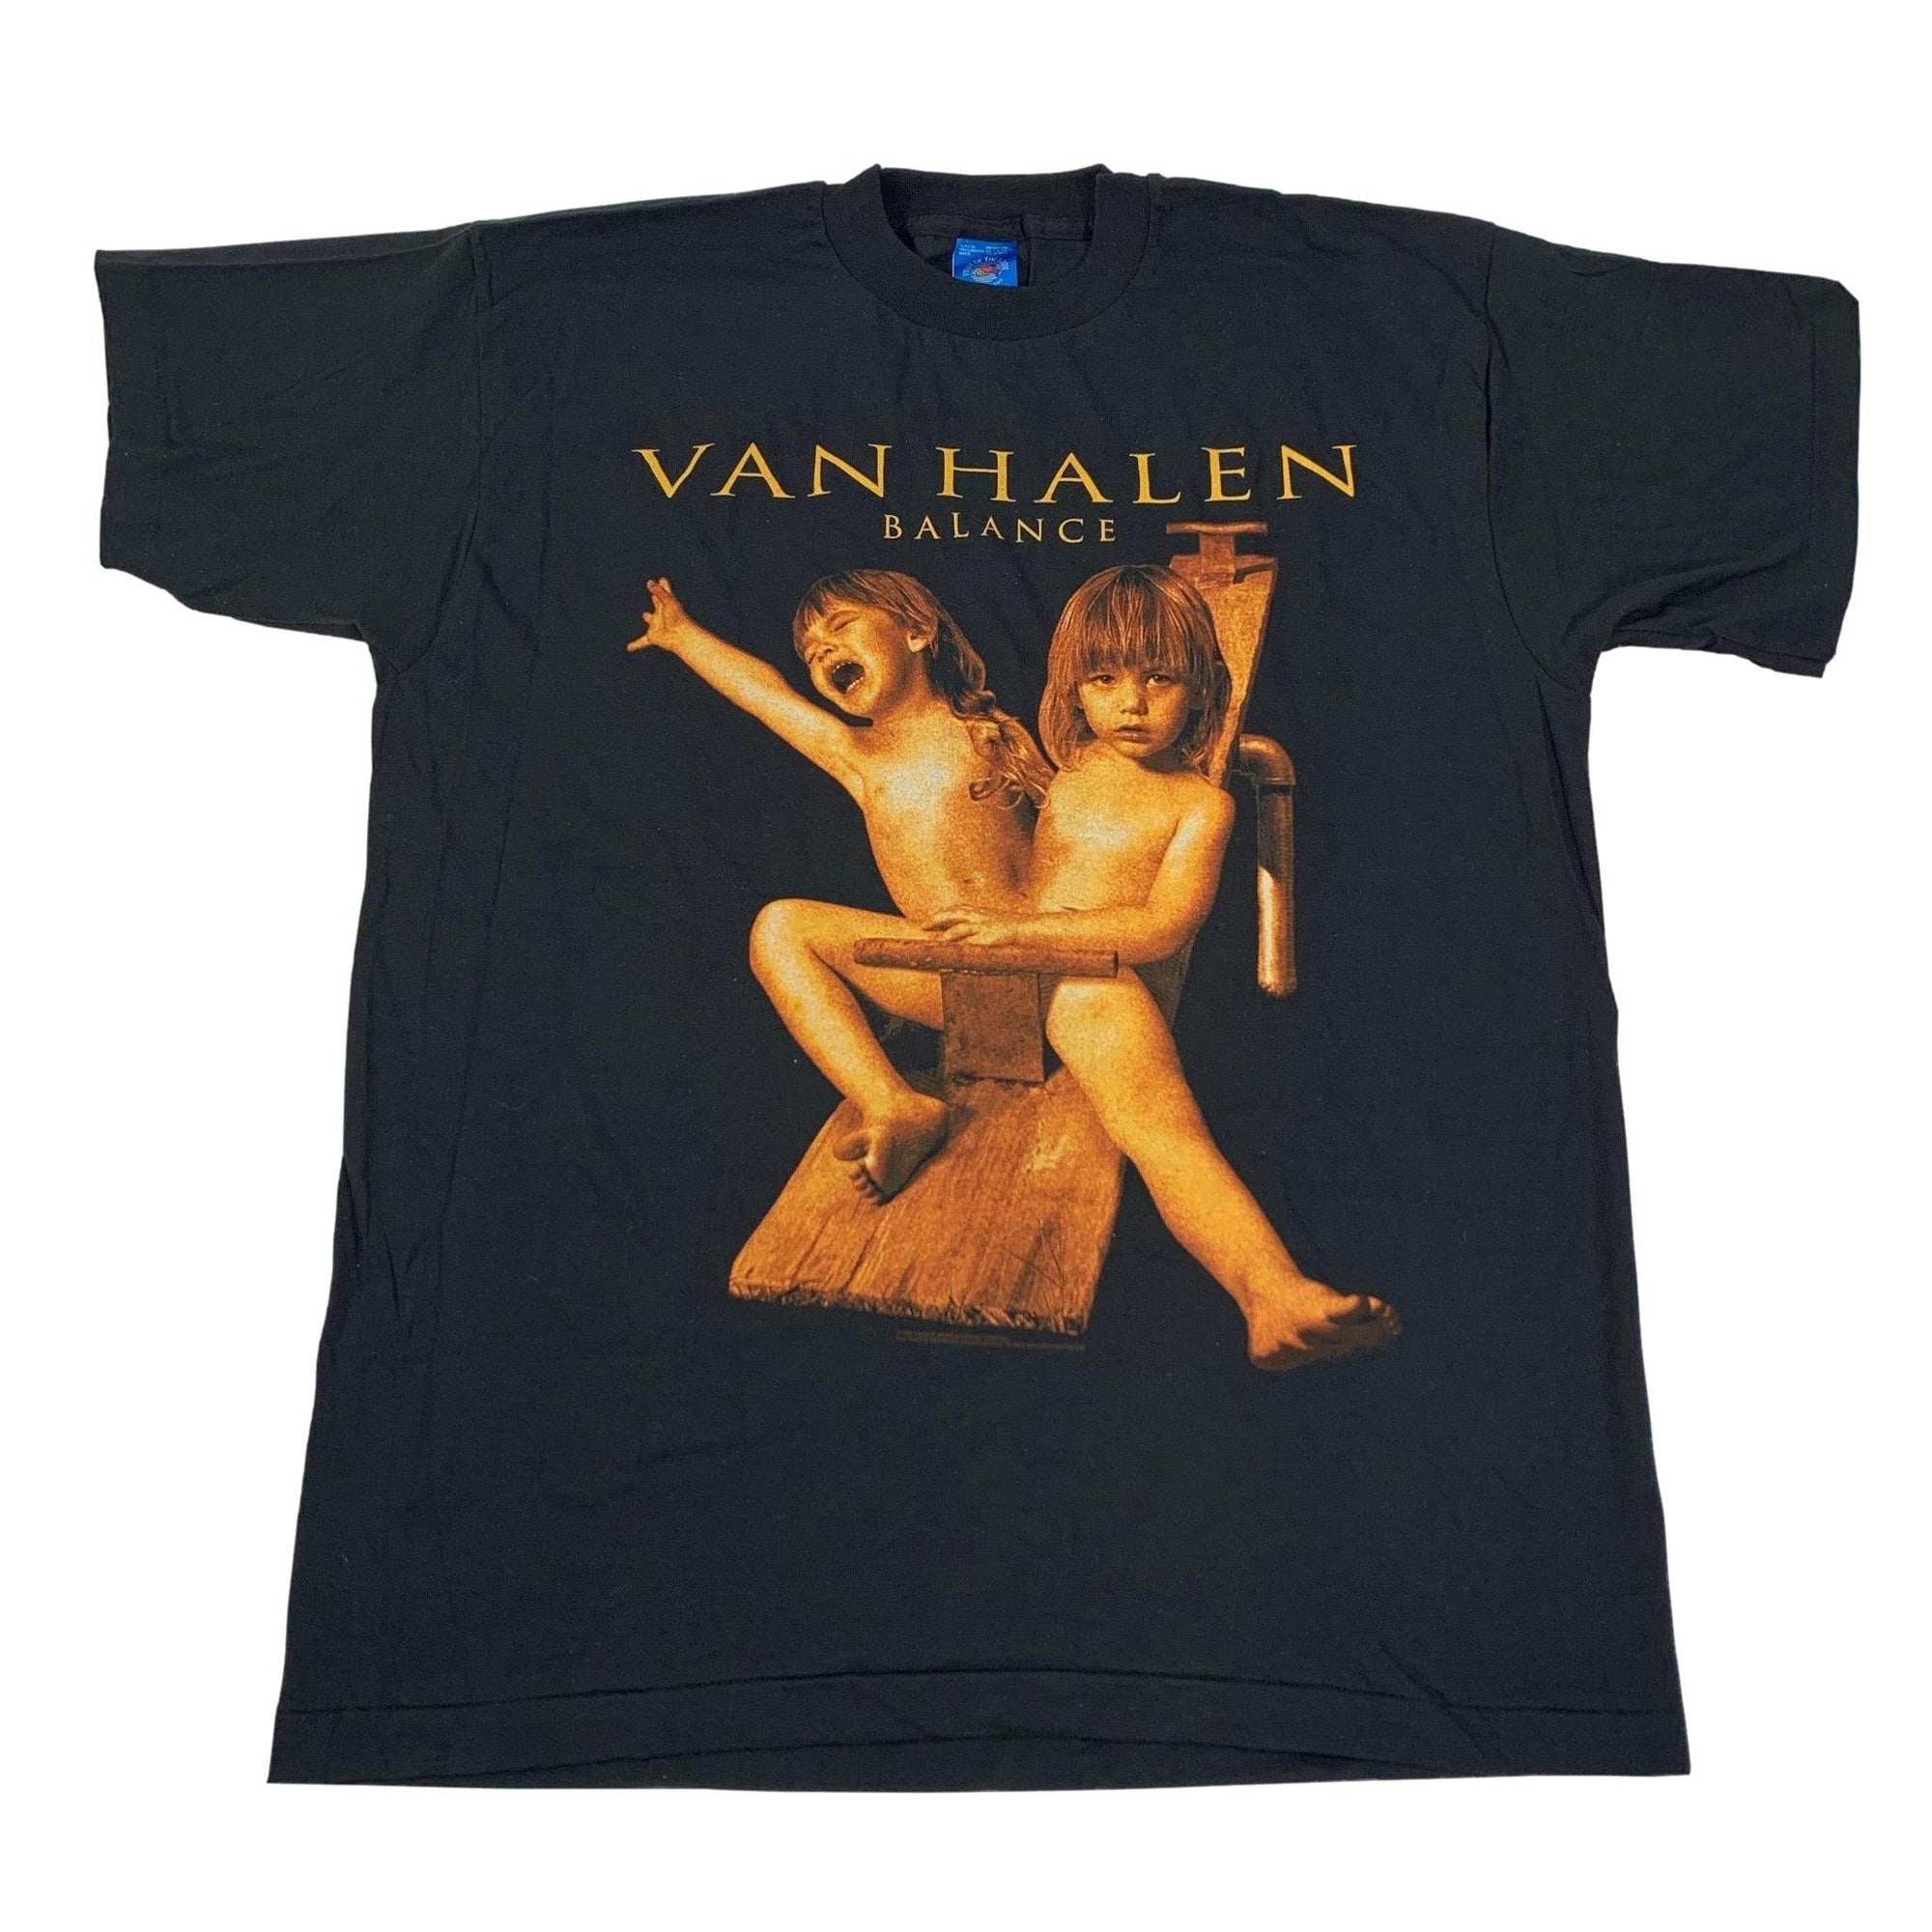 Vintage Van Halen "Balance" Tour T-Shirt - jointcustodydc